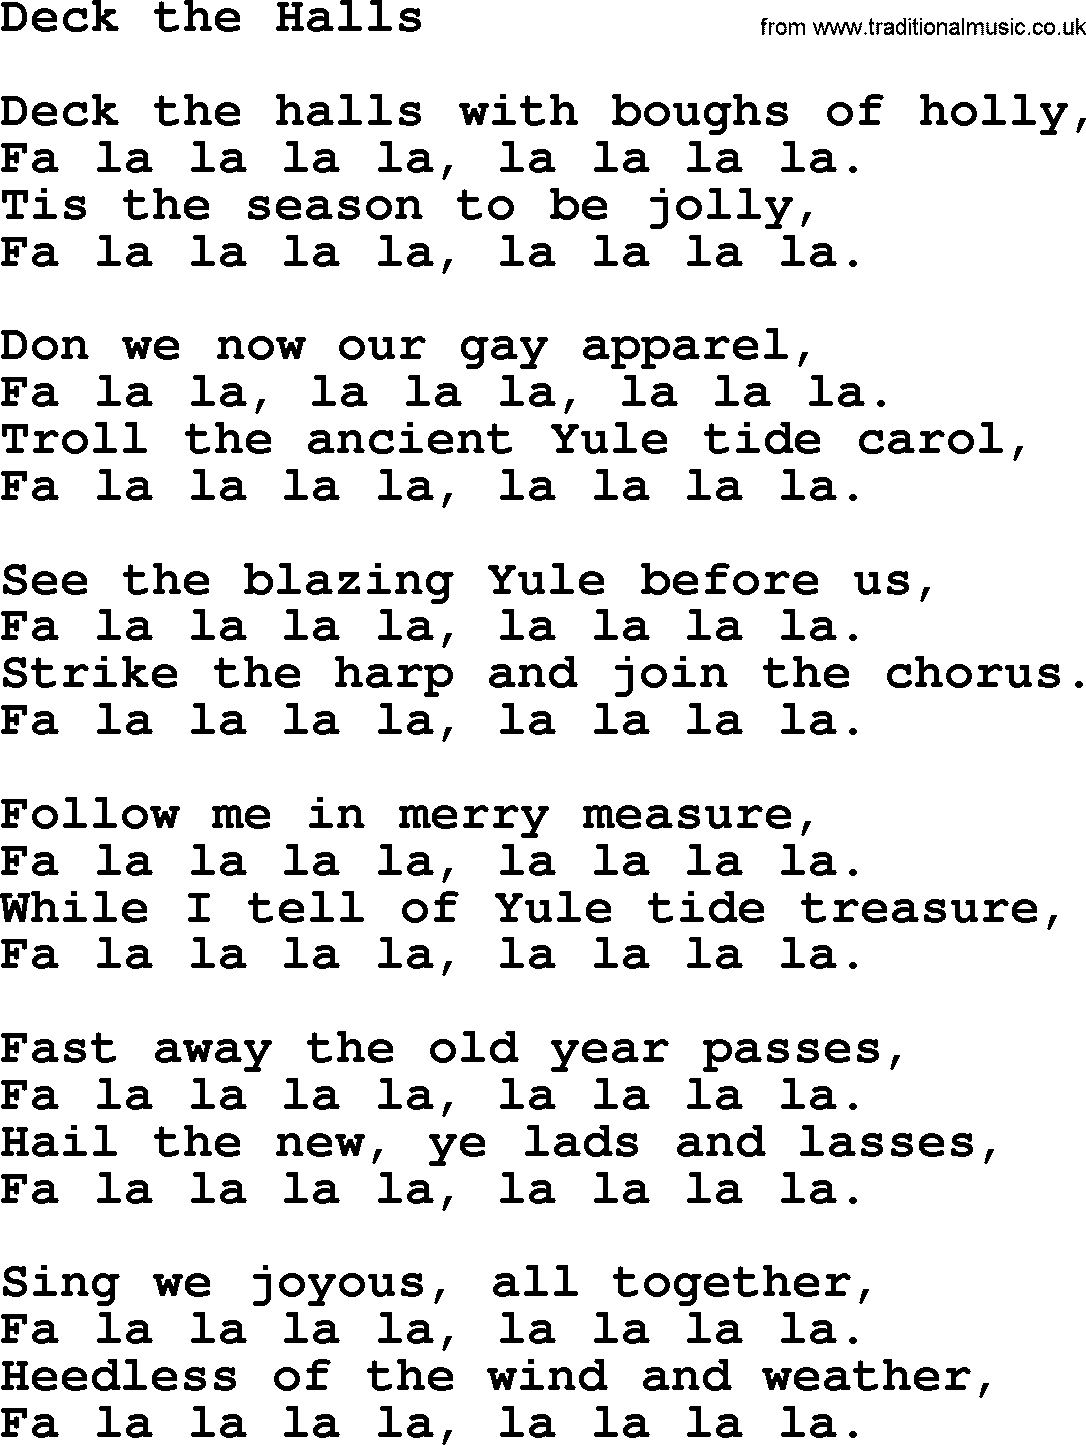 Deck The Halls, by The Byrds lyrics with pdf